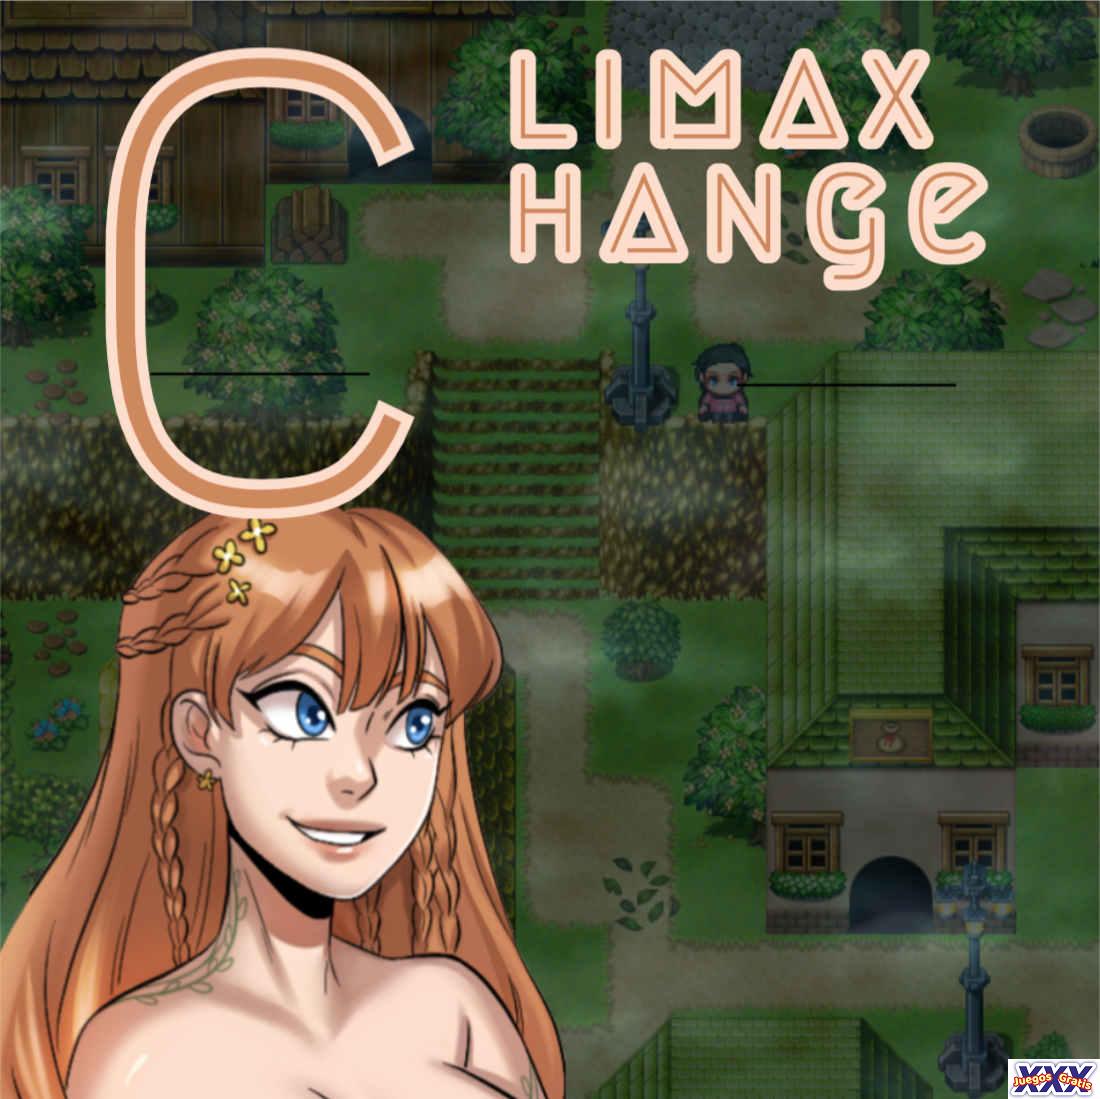 CLIMAX CHANGE [V0.25A] [SEED SPREADER ENT GAMES]